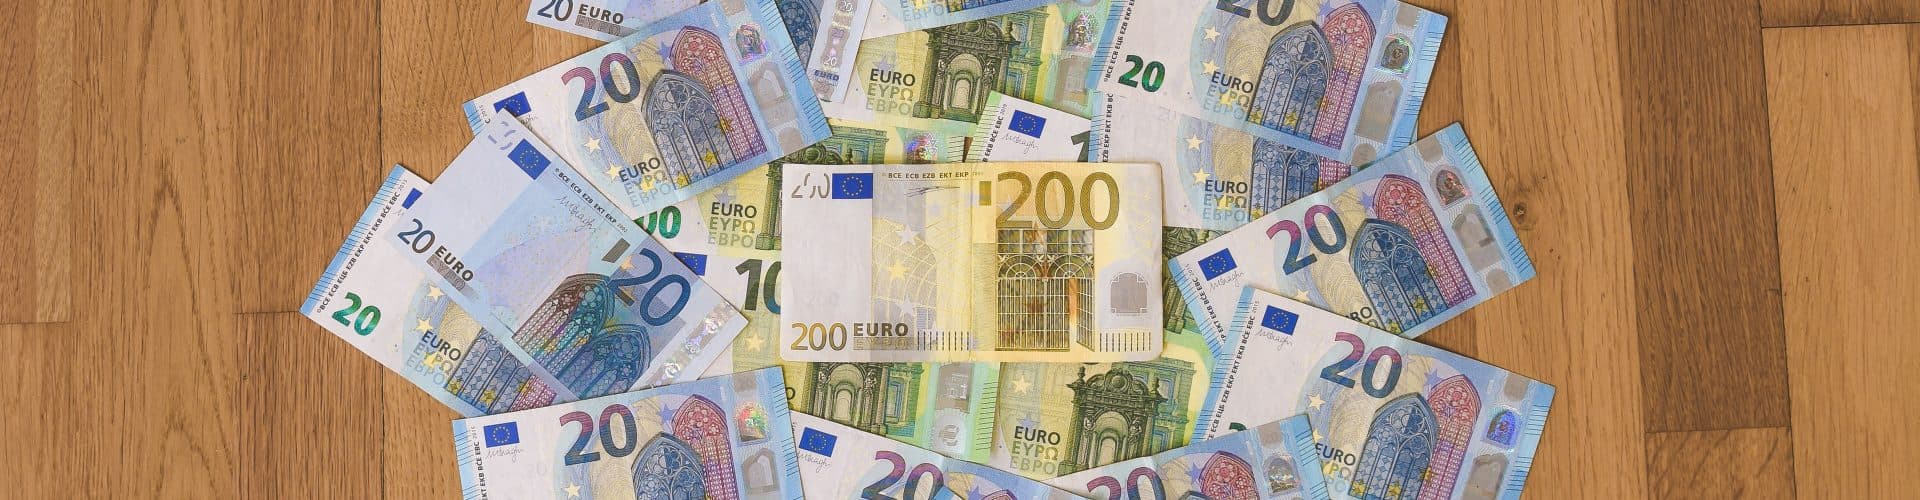 euro bills sitting on the floor